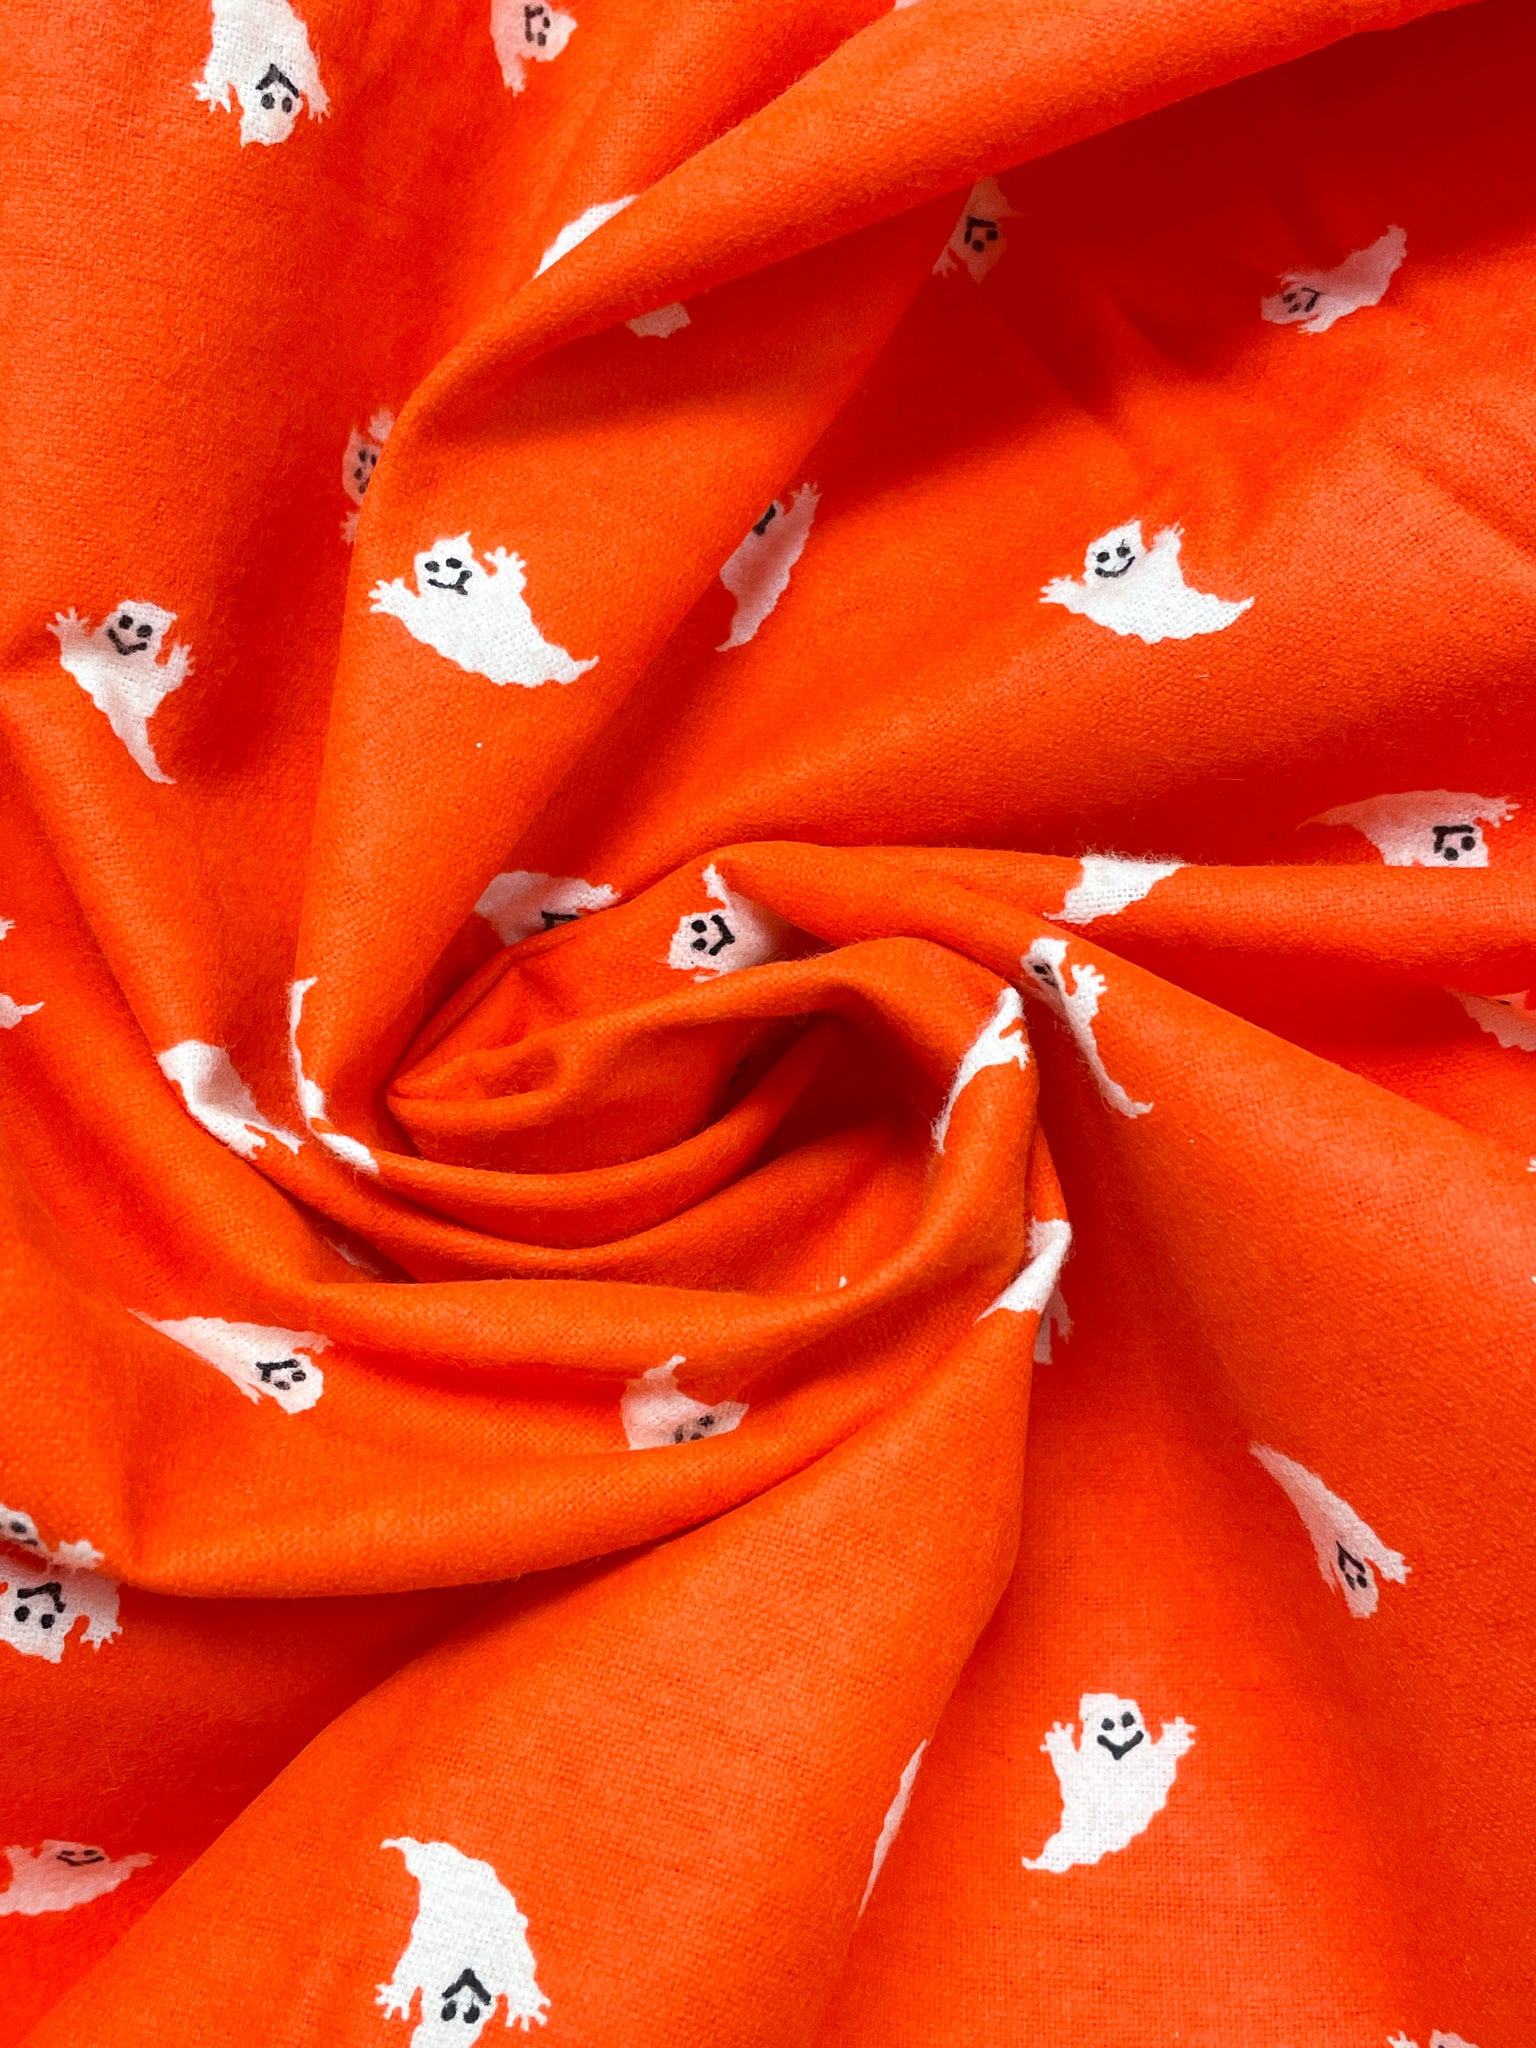 4 YD Cotton Flannel - Bright Orange with White Ghosts